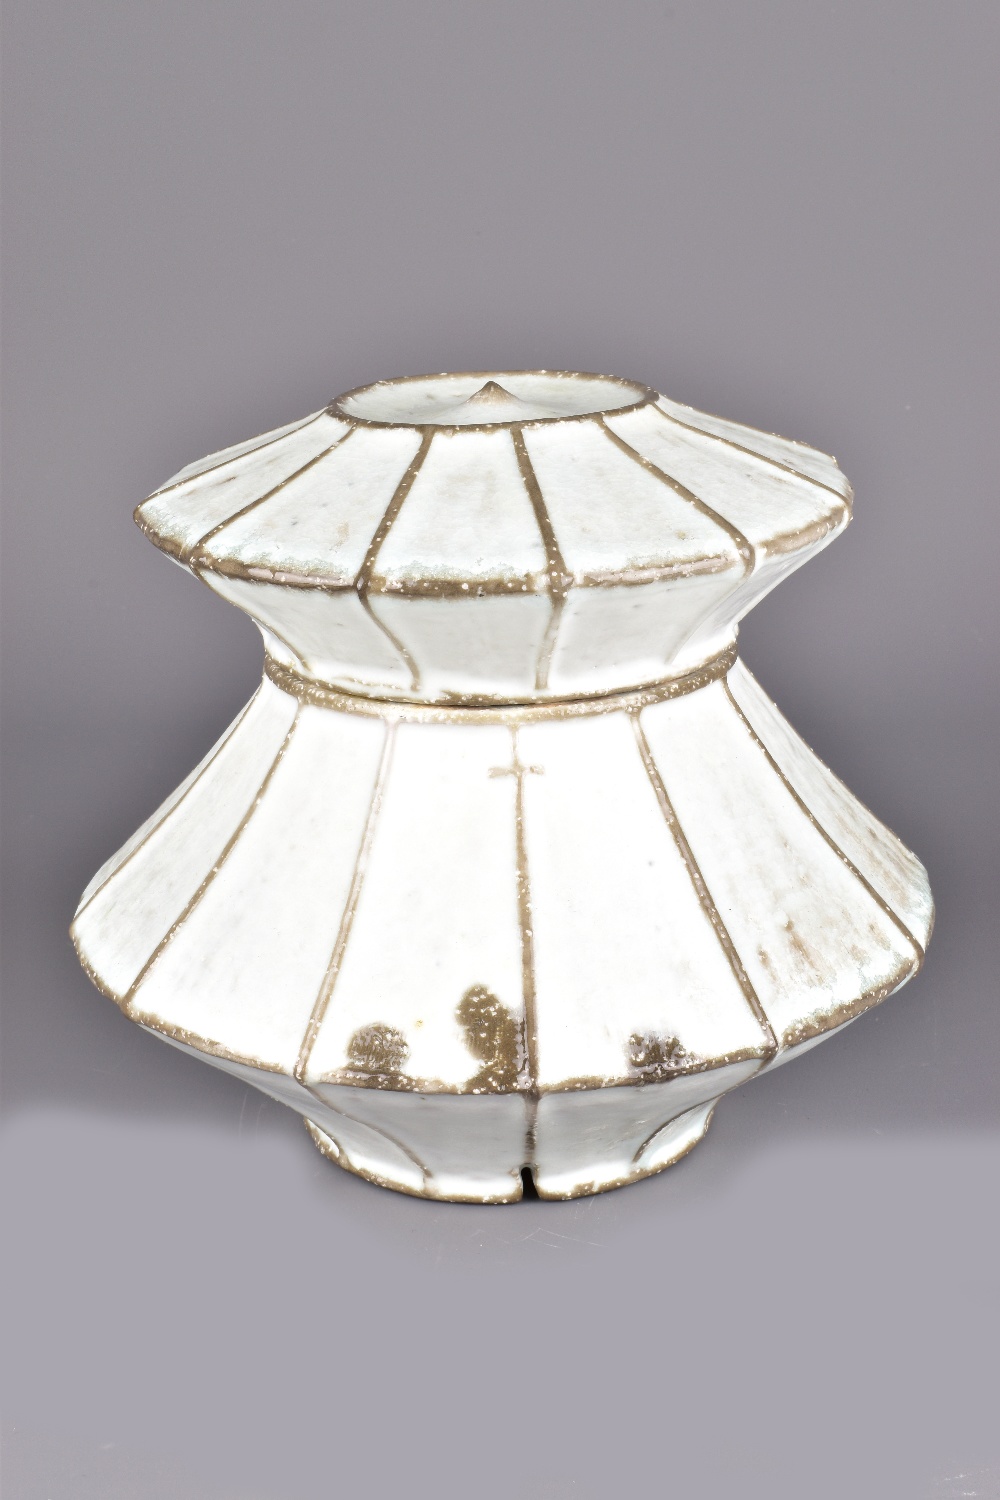 KENYON HANSEN; an angular porcelain jar and cover, impressed K mark, height 17.5cm. Provenance: